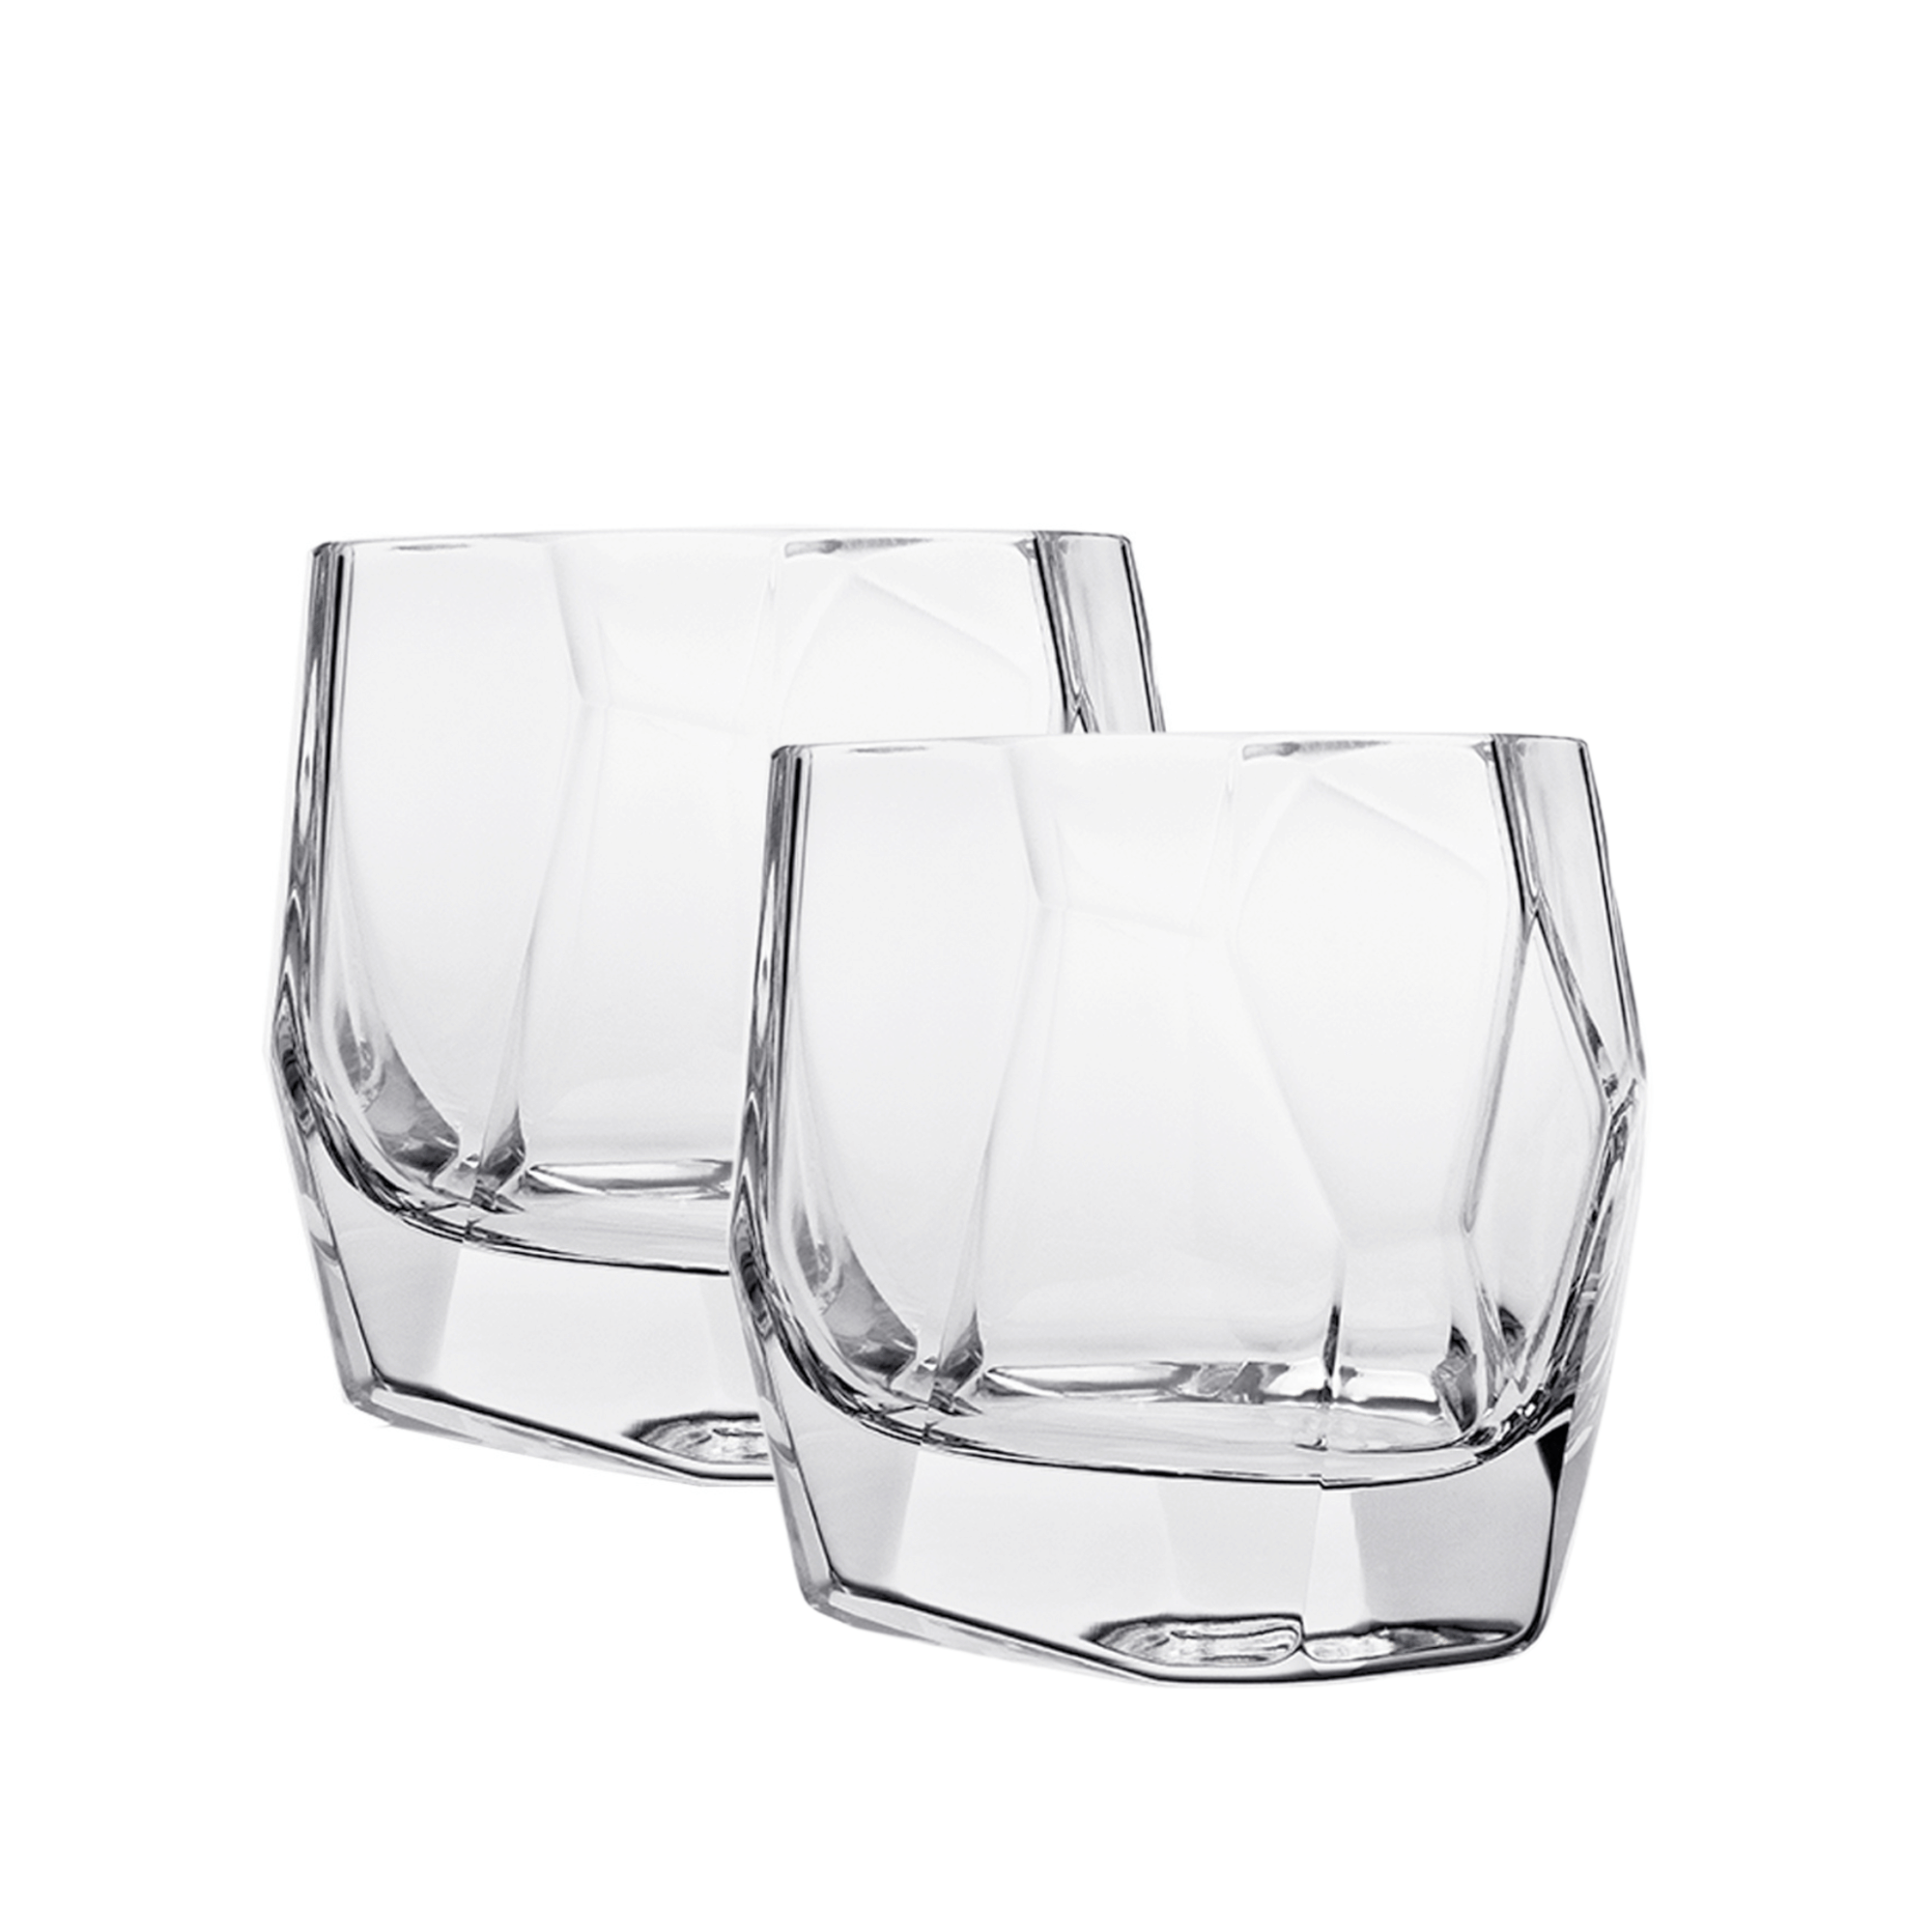 Crystal scotch whiskey glass clear